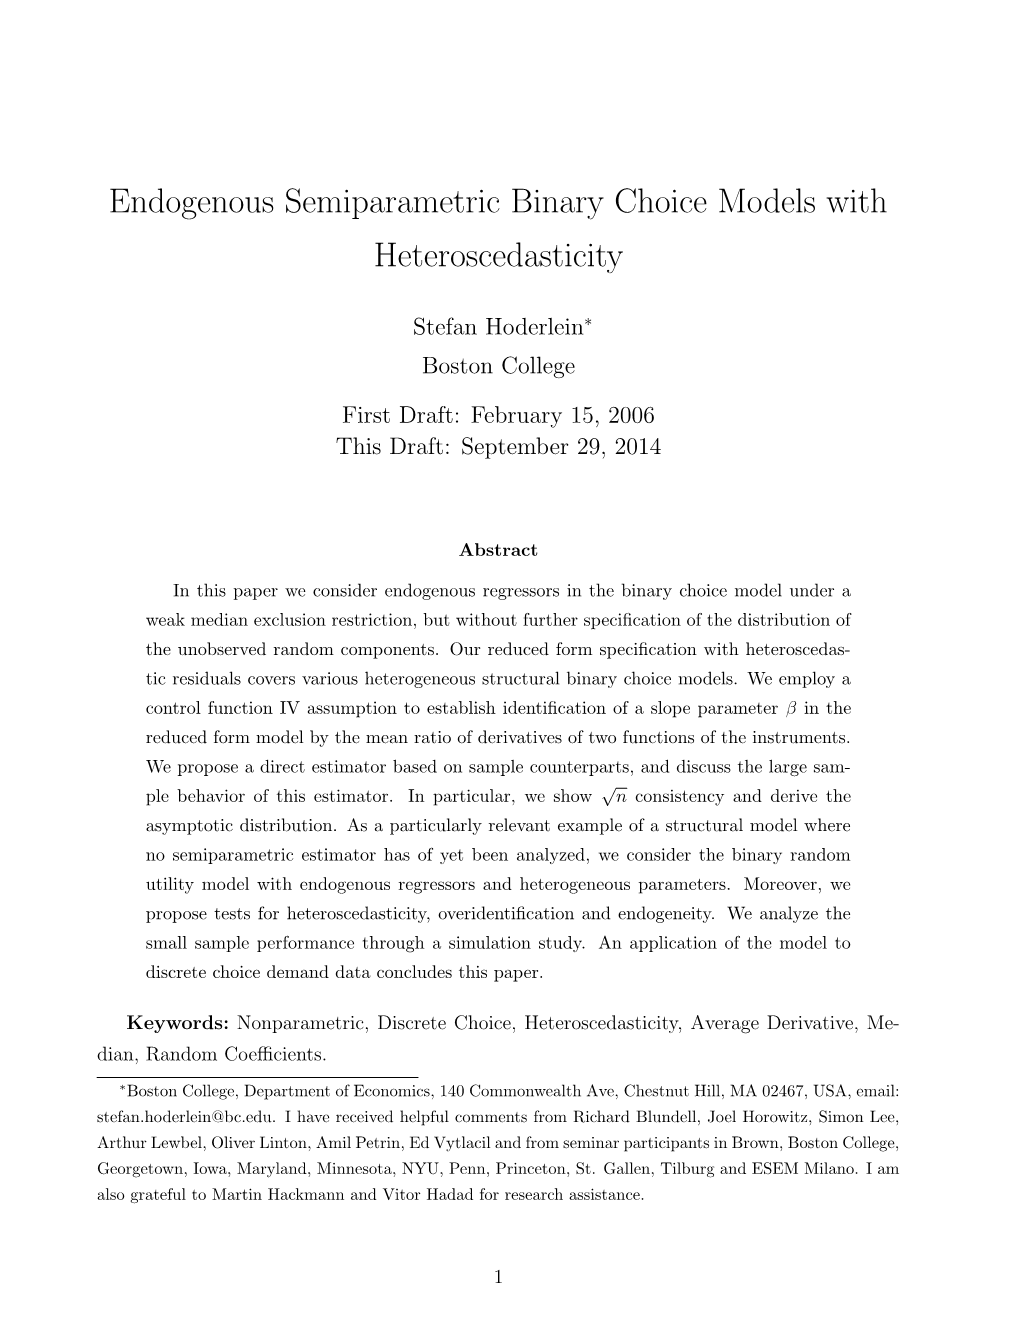 Endogenous Semiparametric Binary Choice Models with Heteroscedasticity